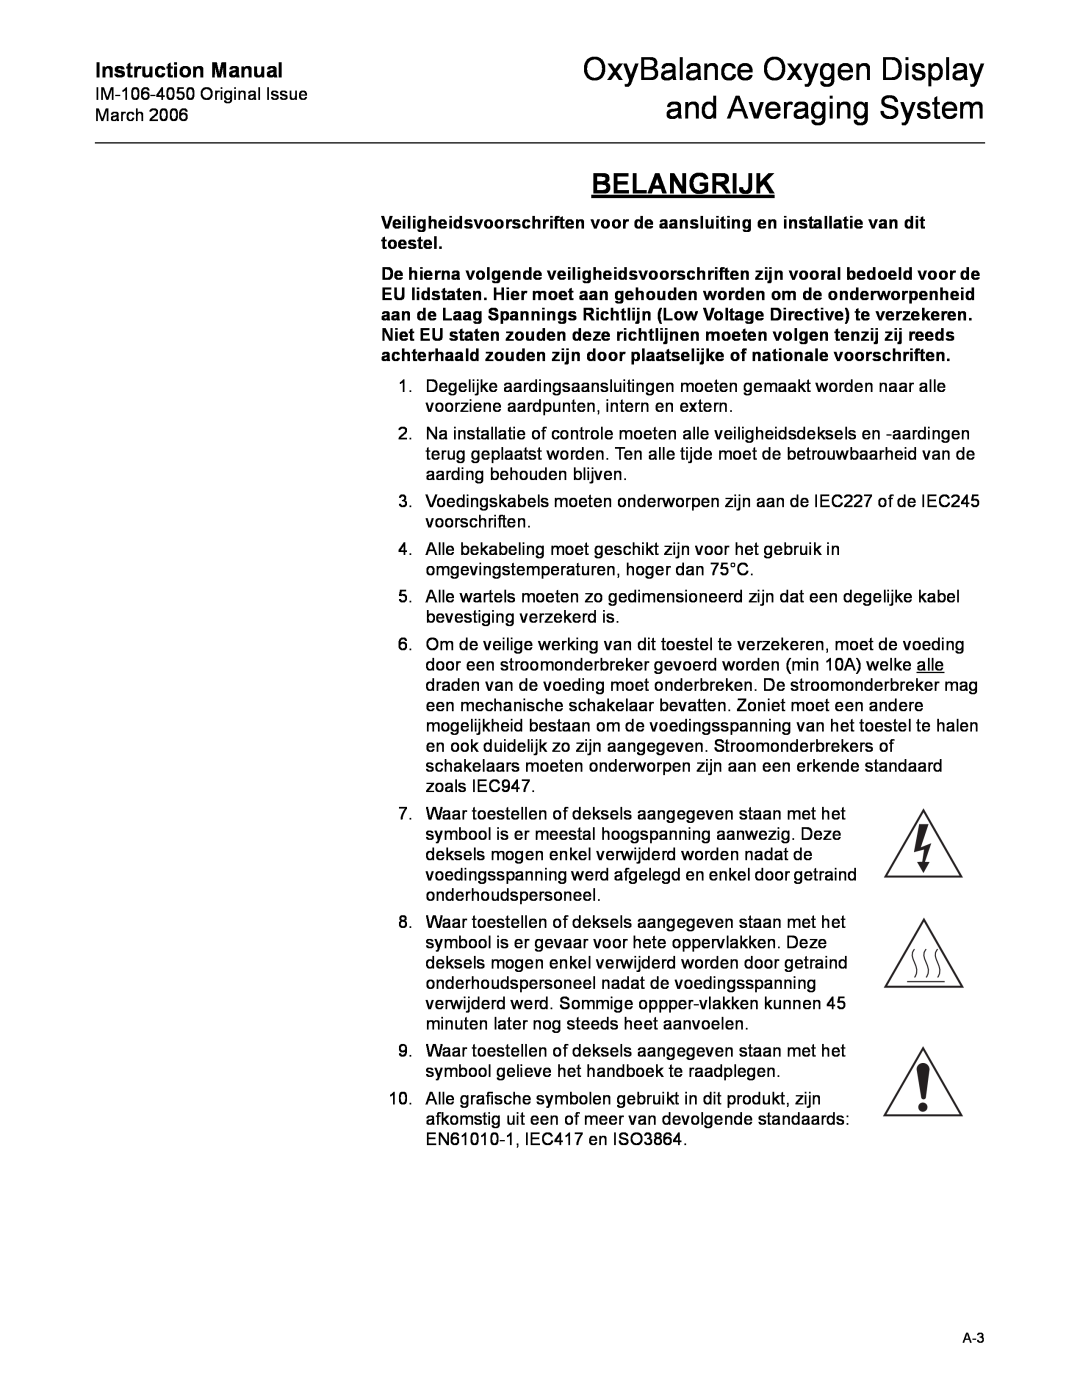 Emerson IM-106-4050 instruction manual Belangrijk, OxyBalance Oxygen Display and Averaging System, Instruction Manual 